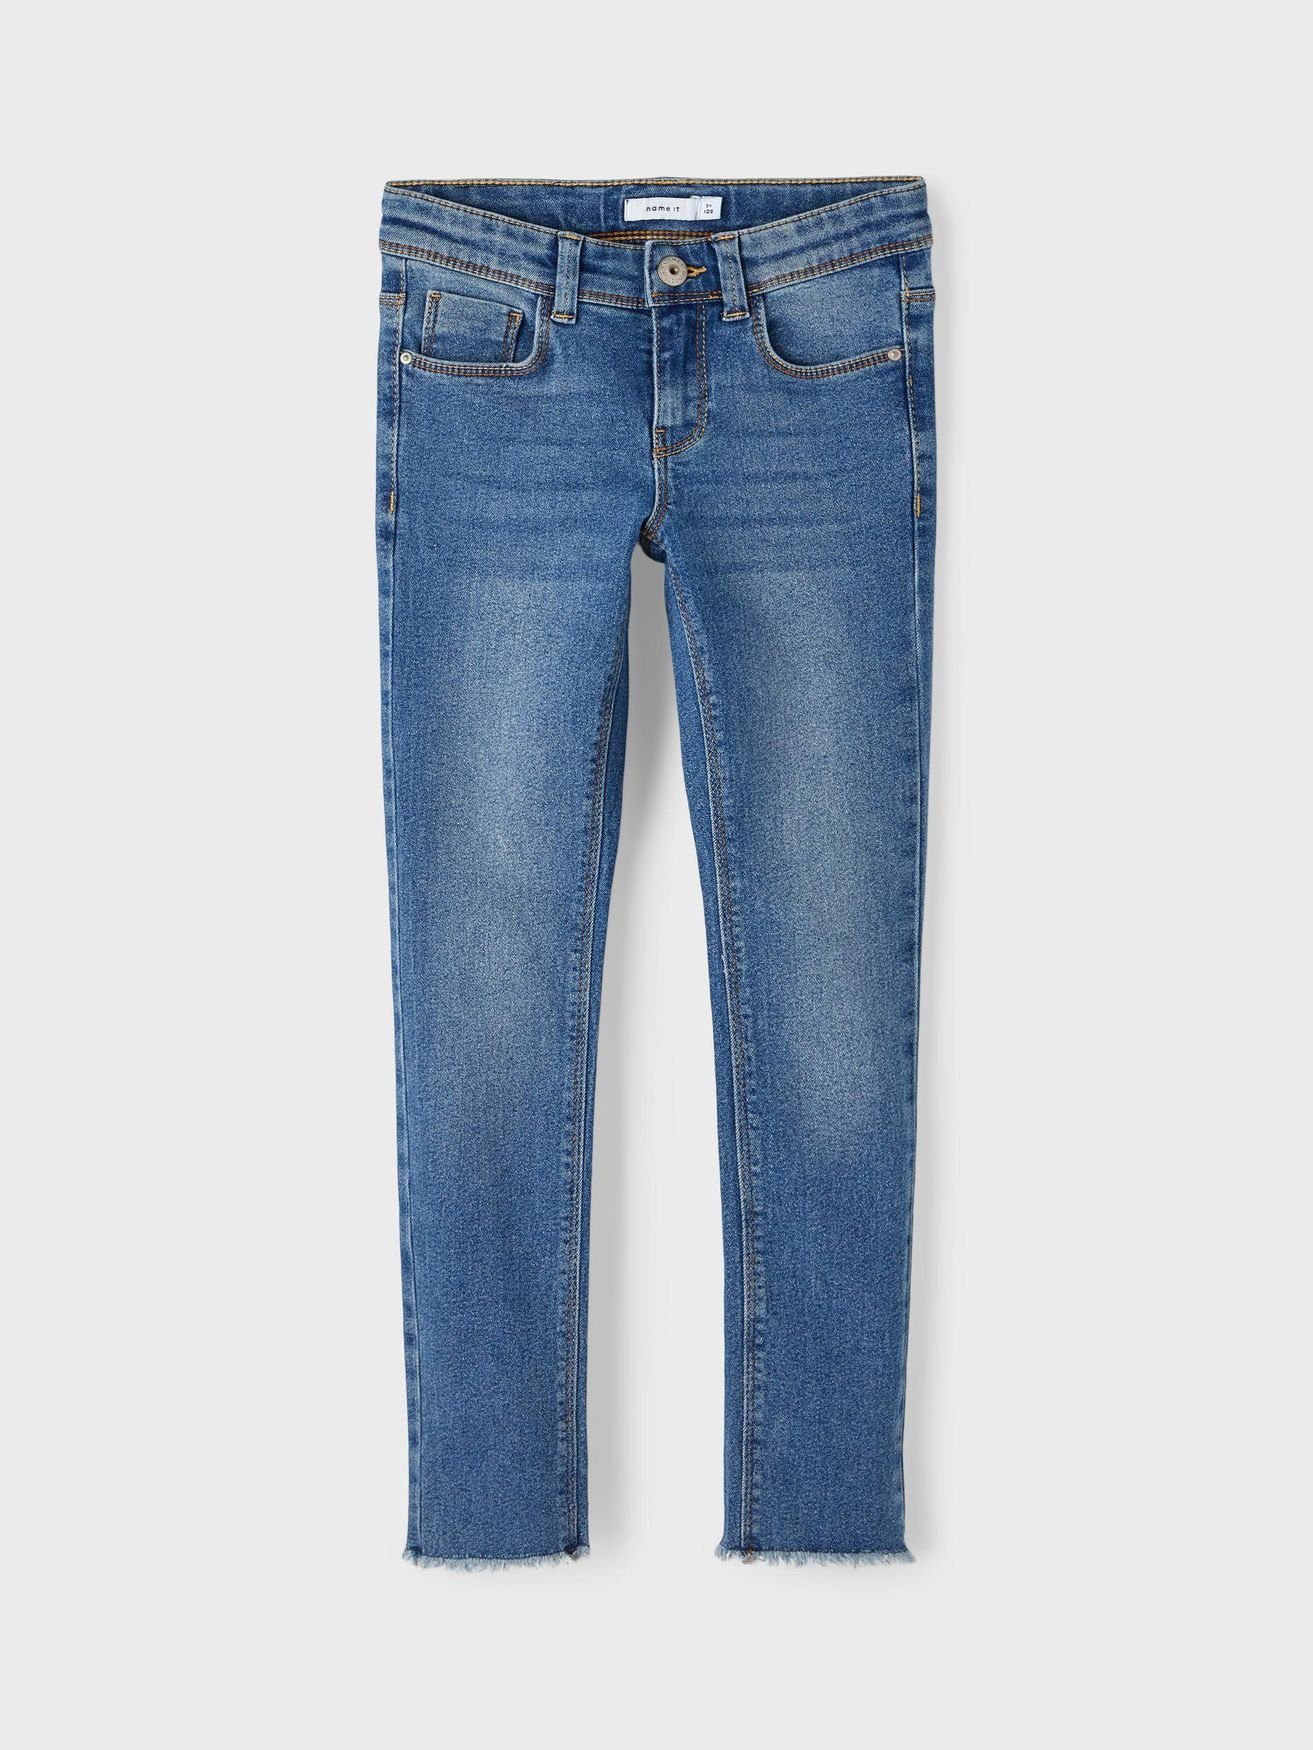 Jeans - Blau, in It Denim Polyester, Hose 1% 75% 5538 Baumwolle, 18% mit MATERIAL Viskose, Skinny NKFPOLLY 6% Name Regular-fit-Jeans Fransen